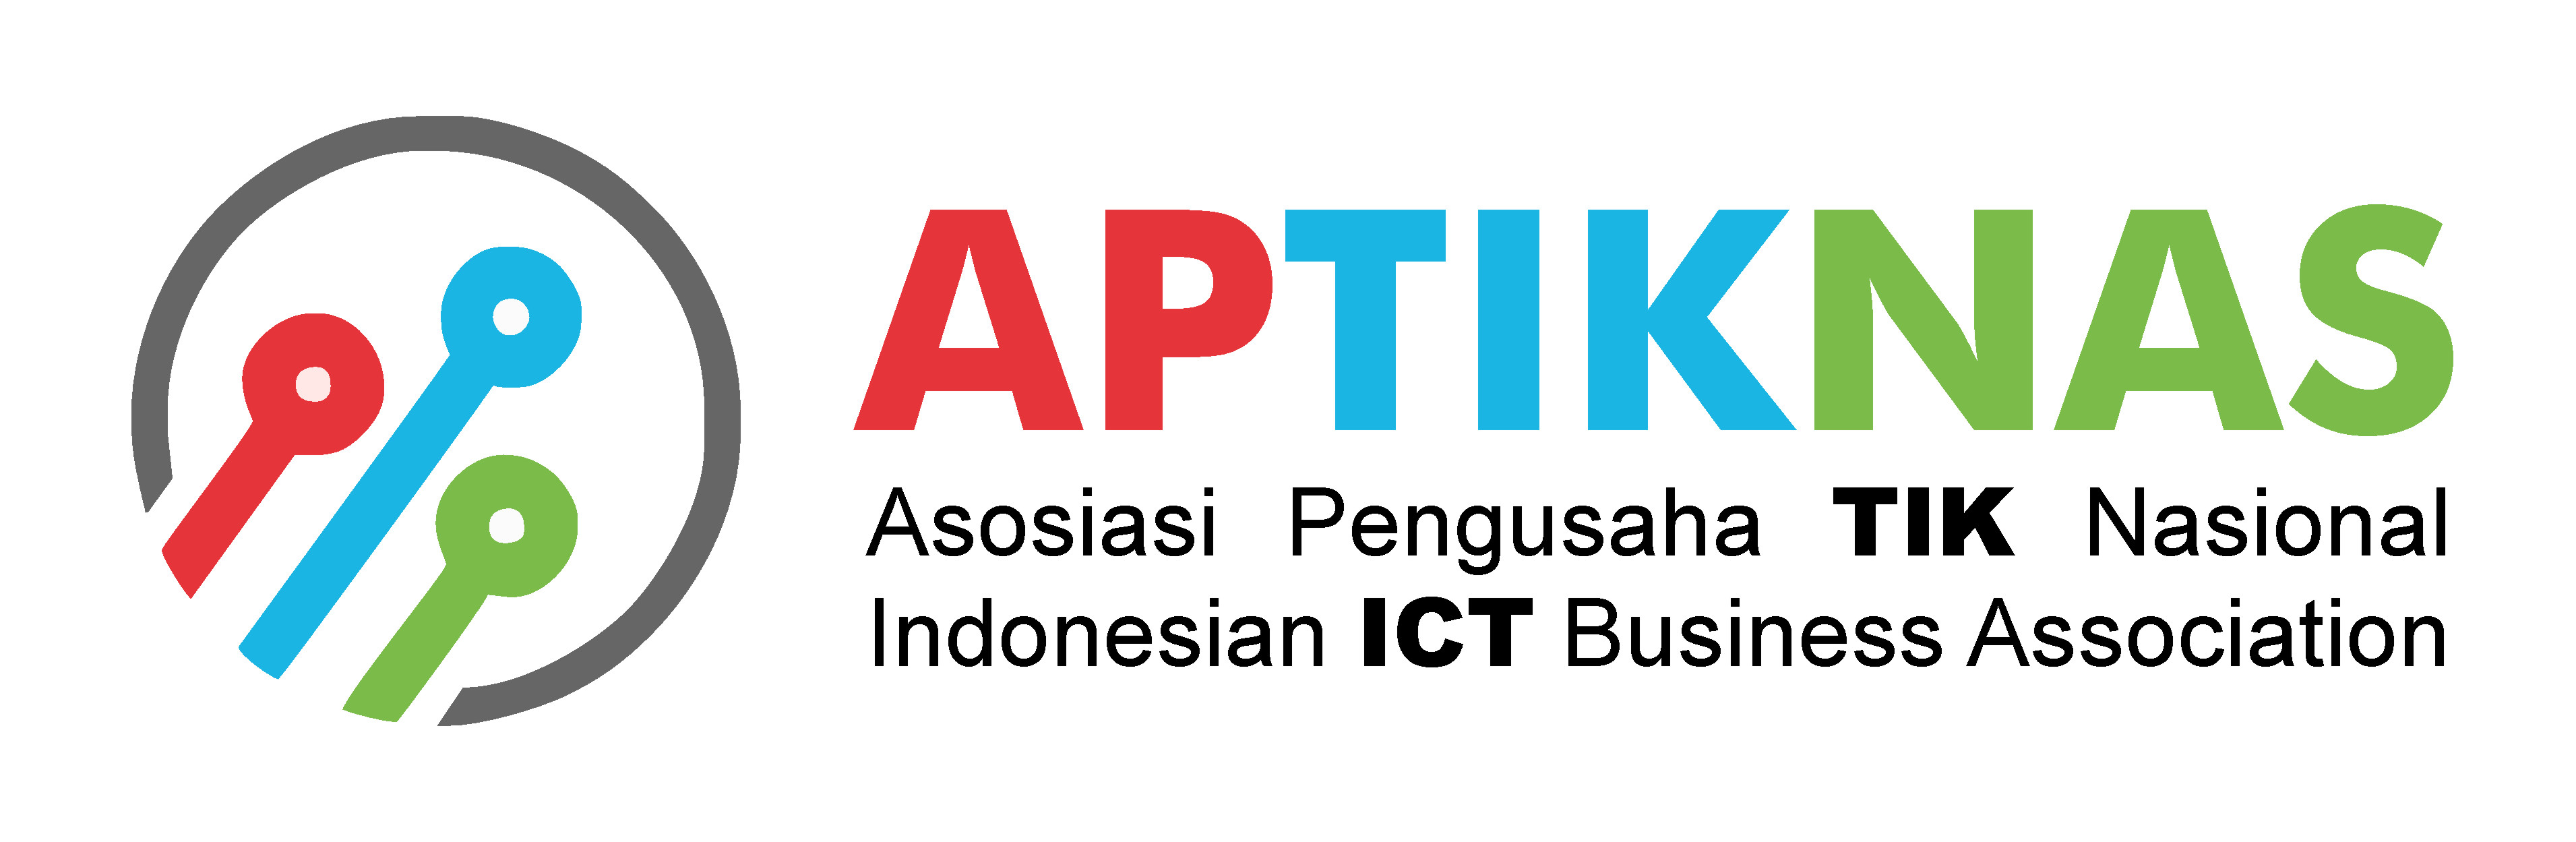 World Cloud Show - Jakarta  - sponsors - Supporting - aptiknas